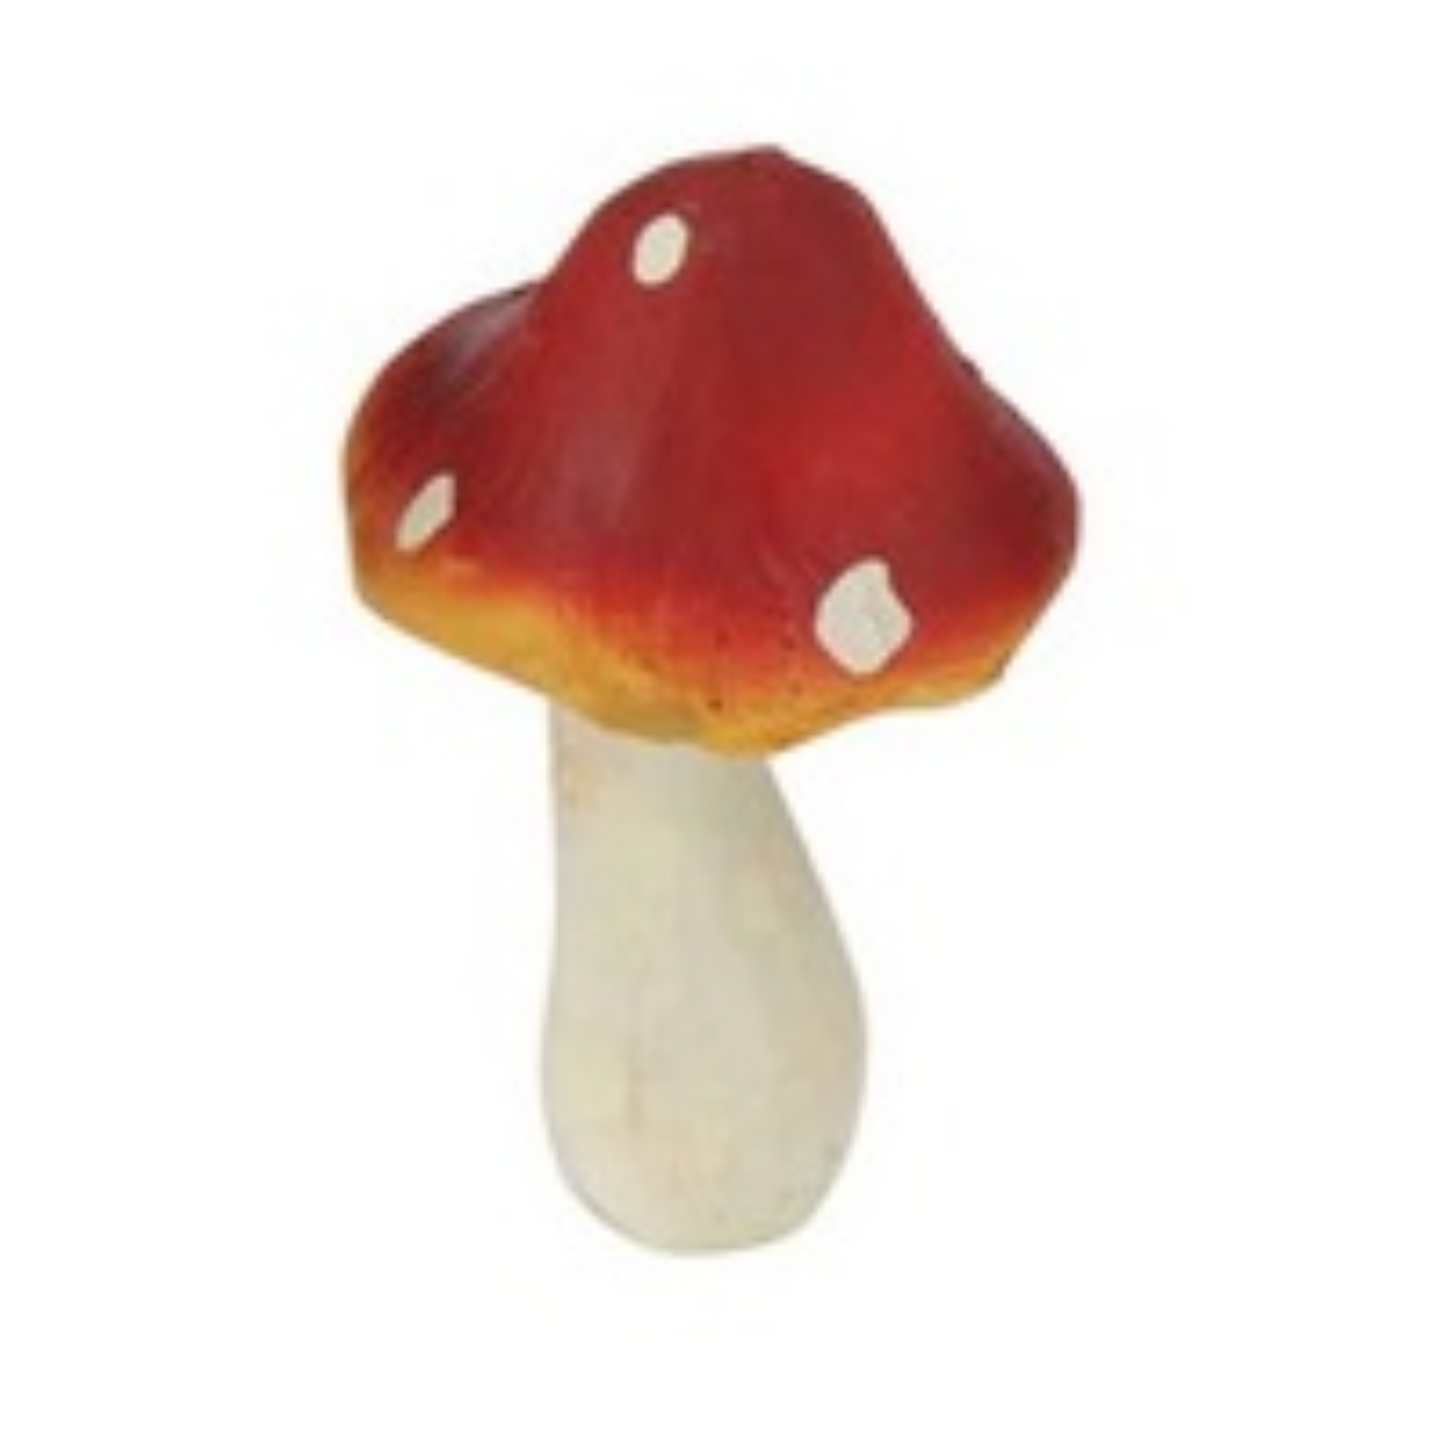 Mushroom Garden Stakes